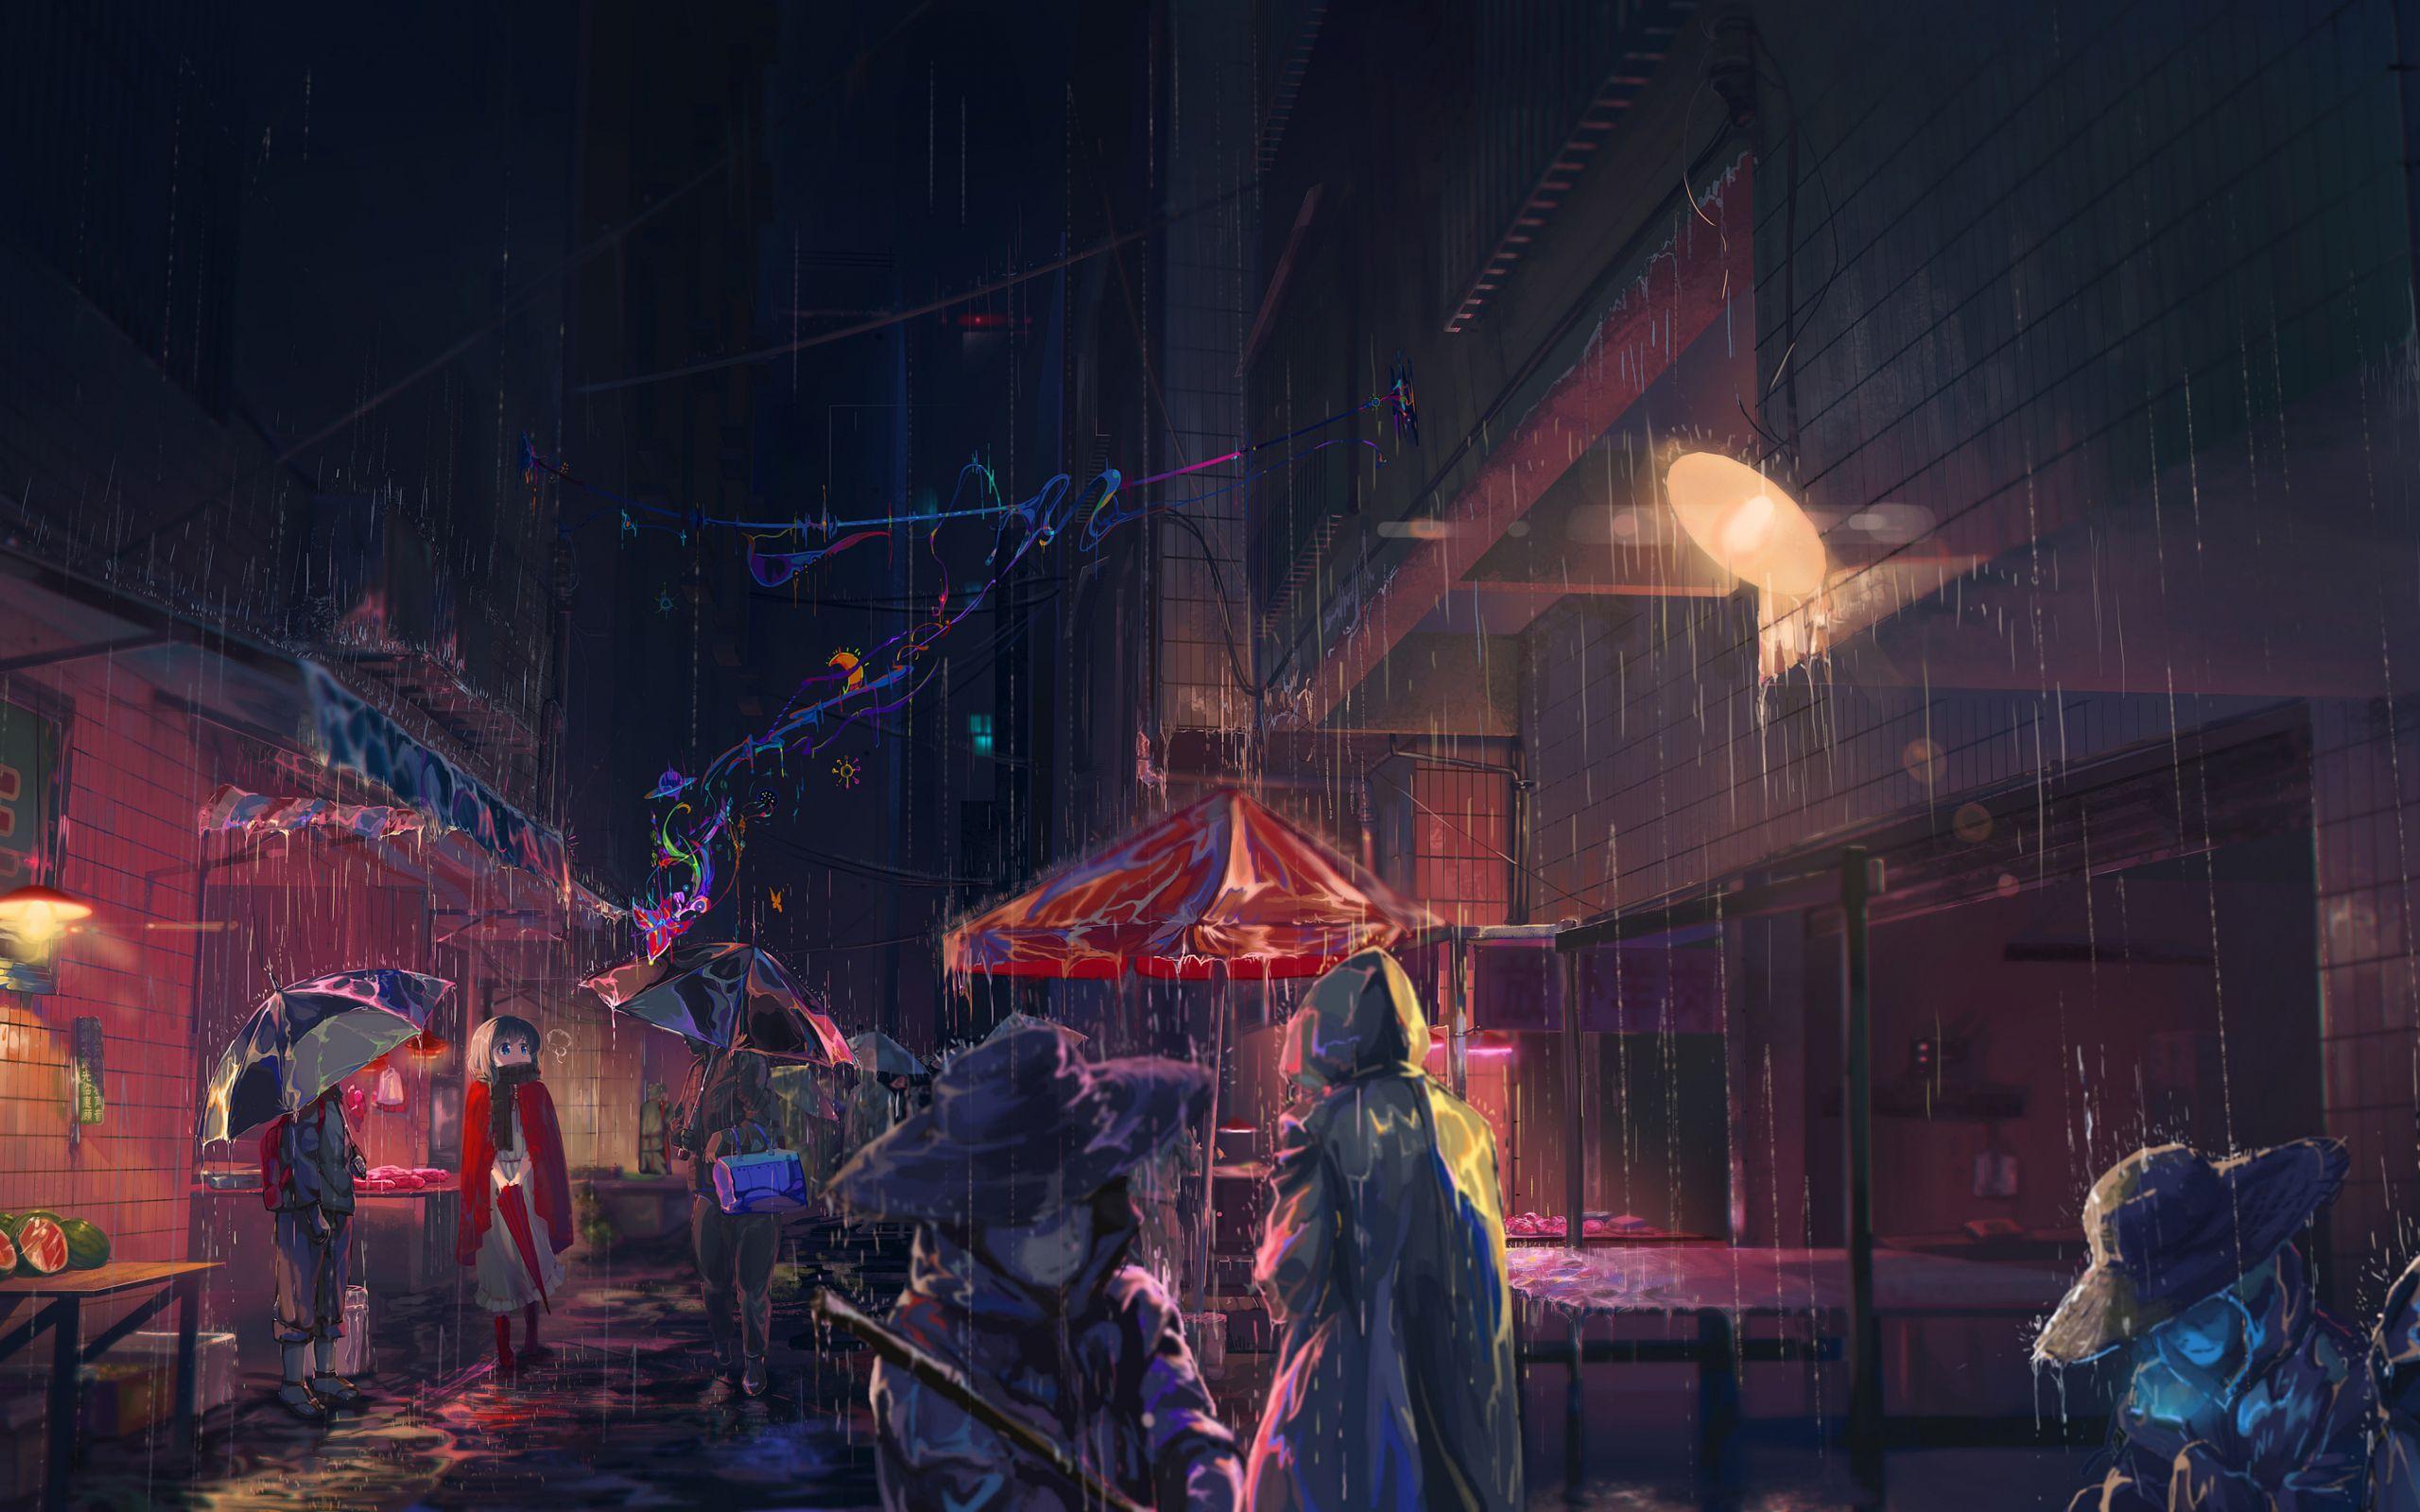 Rain Anime HD Wallpapers - Top Free Rain Anime HD Backgrounds